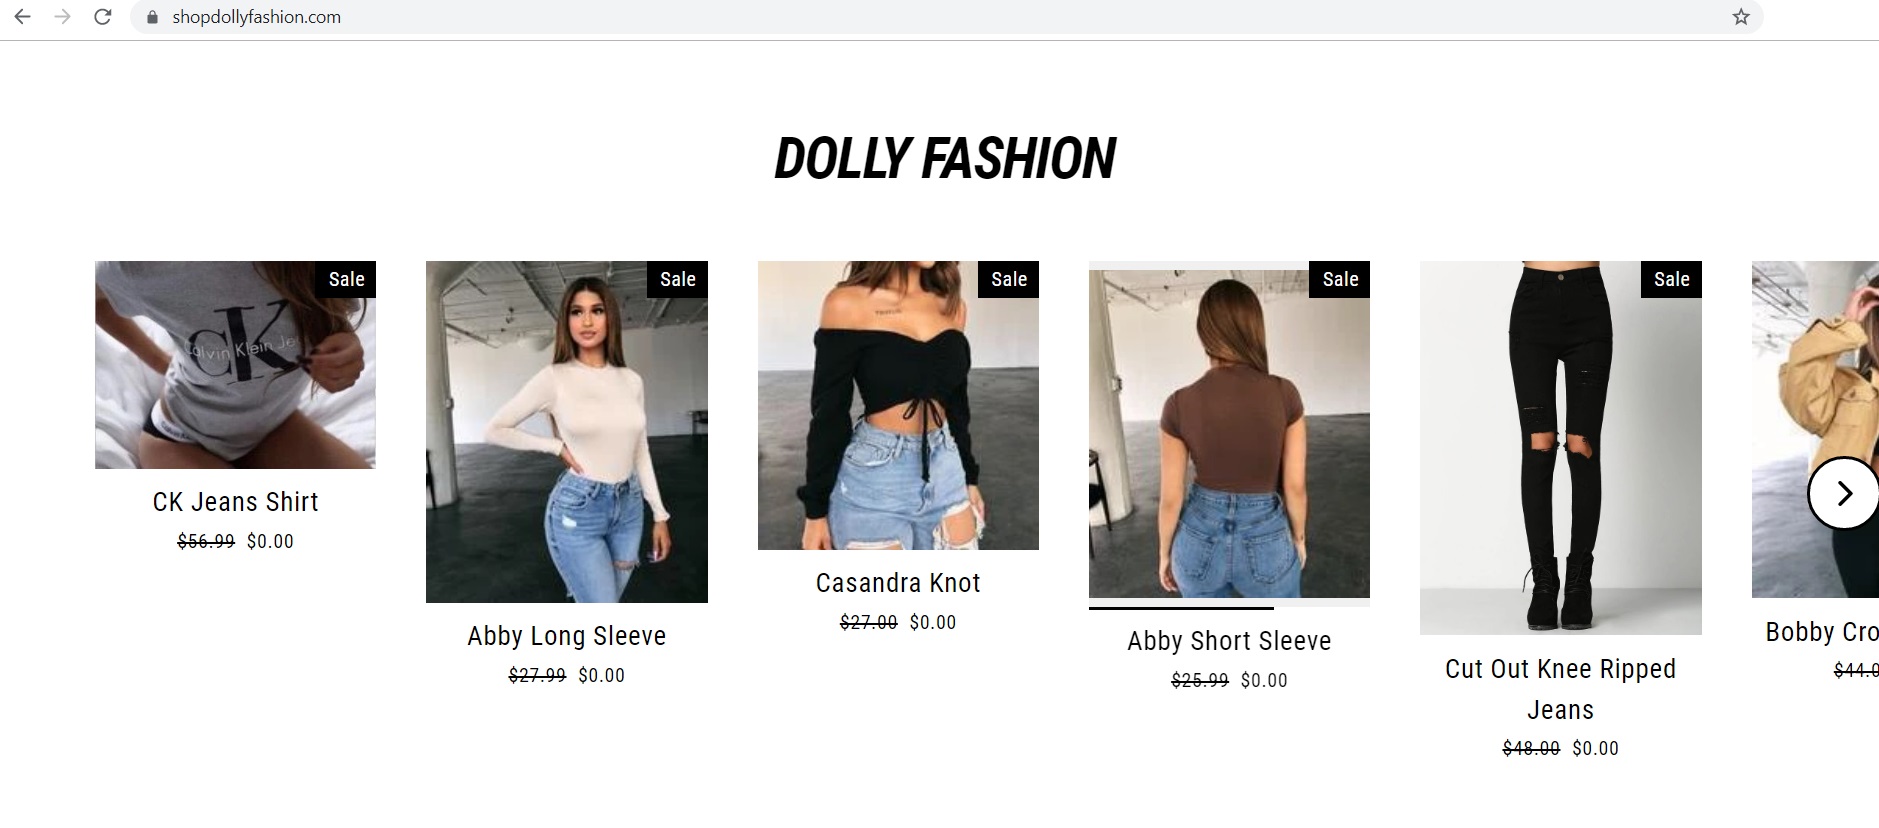 Shop Dolly Fashion at shopdollyfashion.com